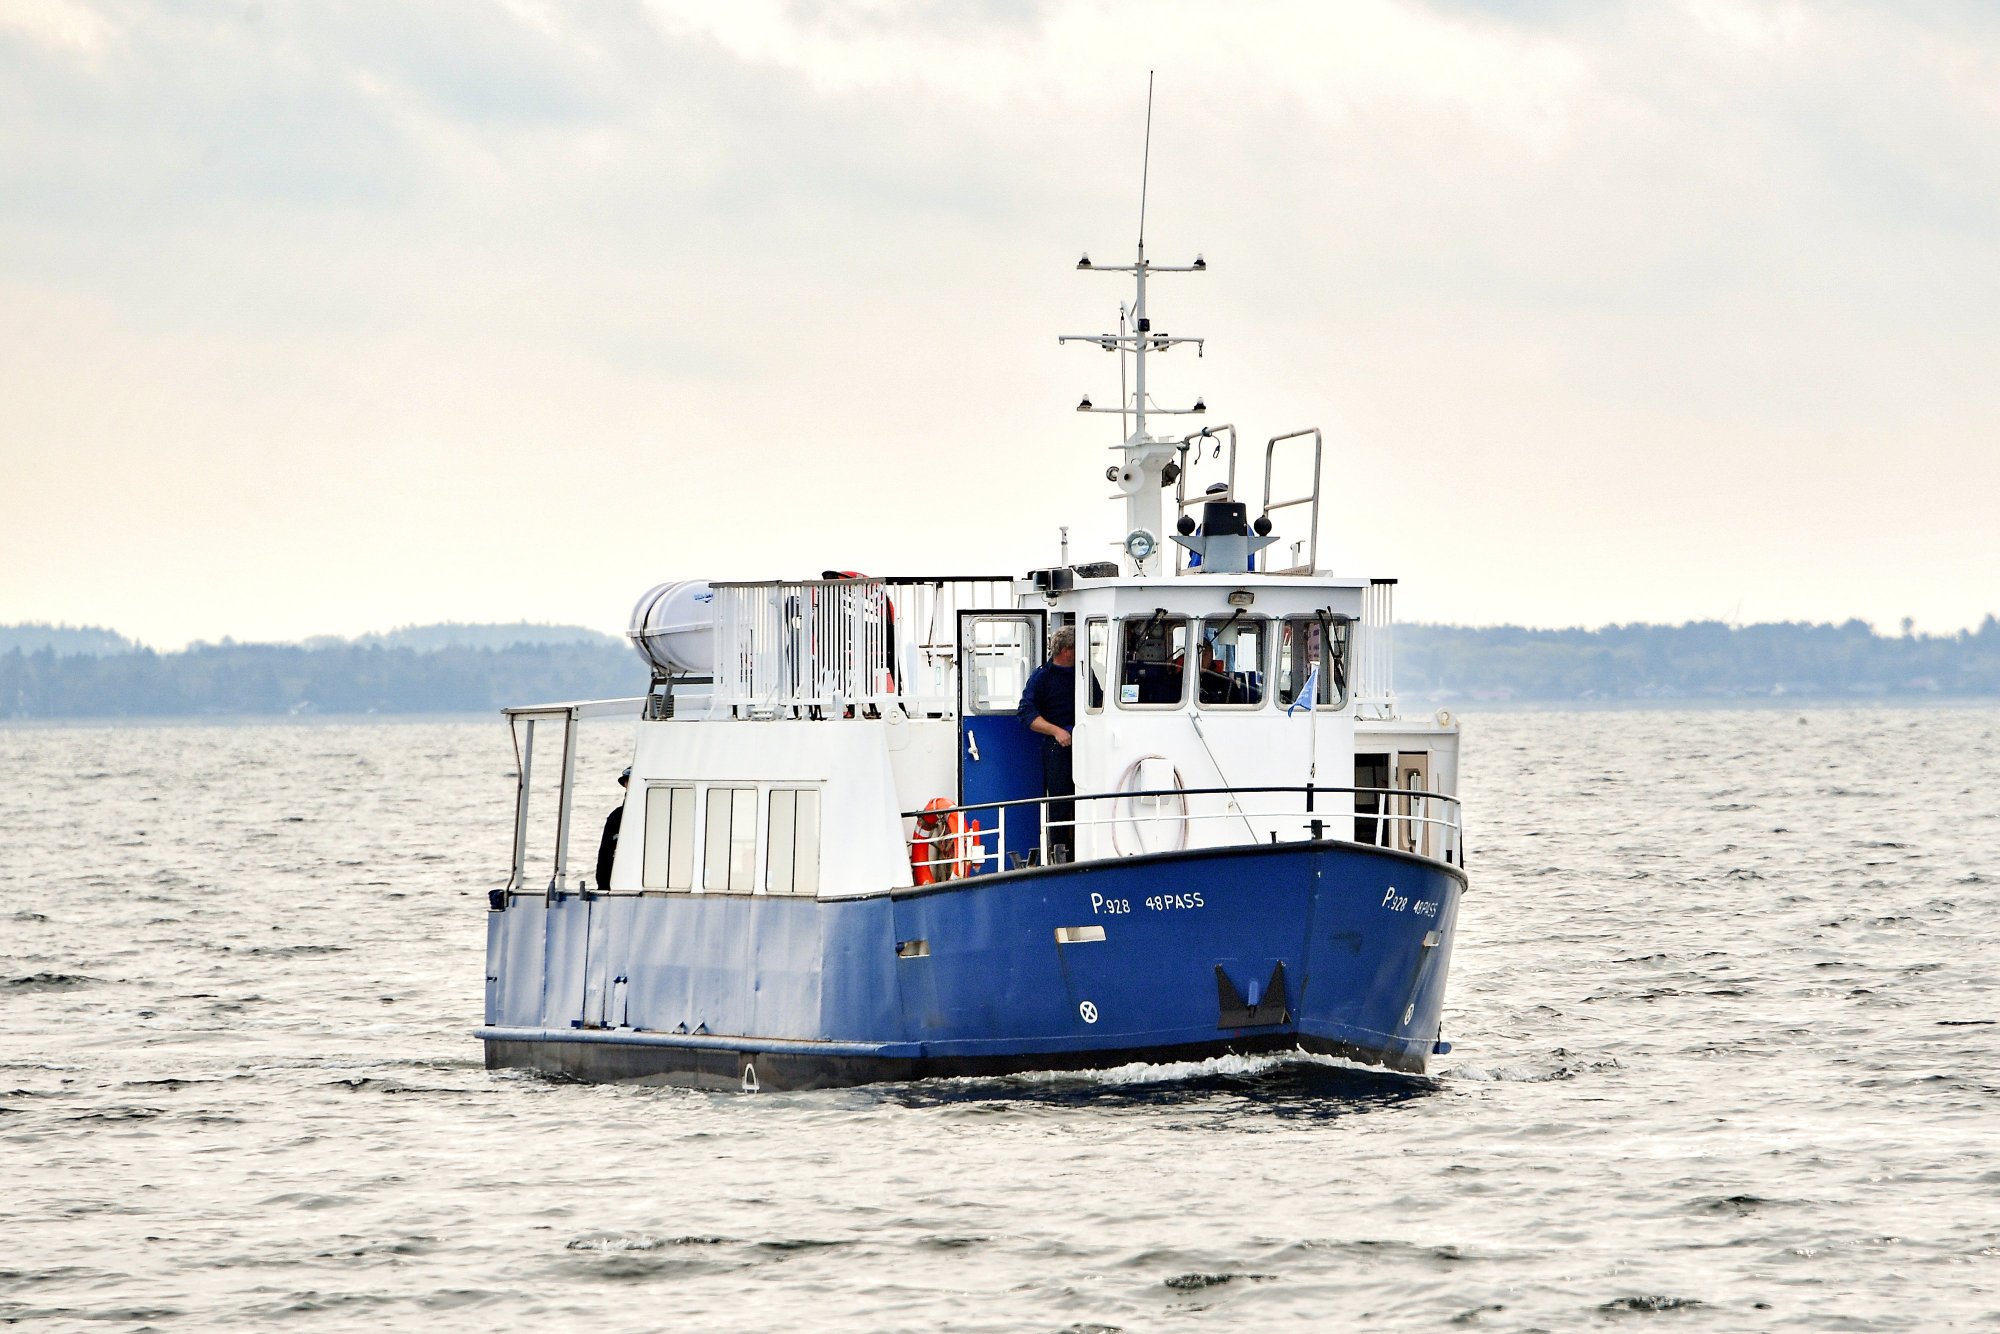 Lokal sømand overtager Livø-overfarten